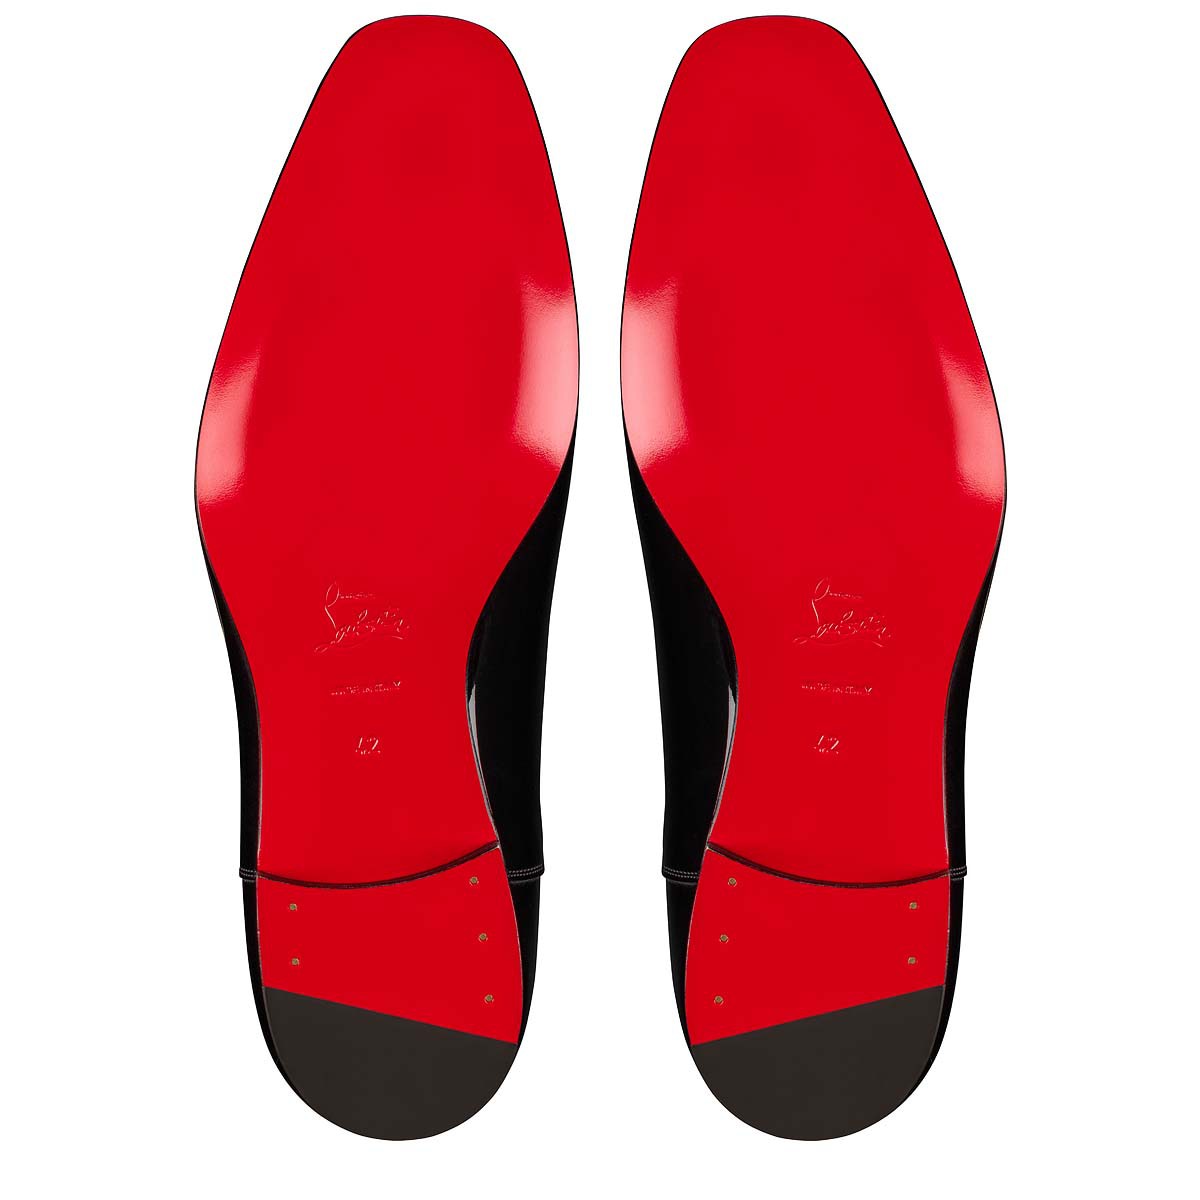 Greghost Black Patent leather - Men Shoes - Christian Louboutin